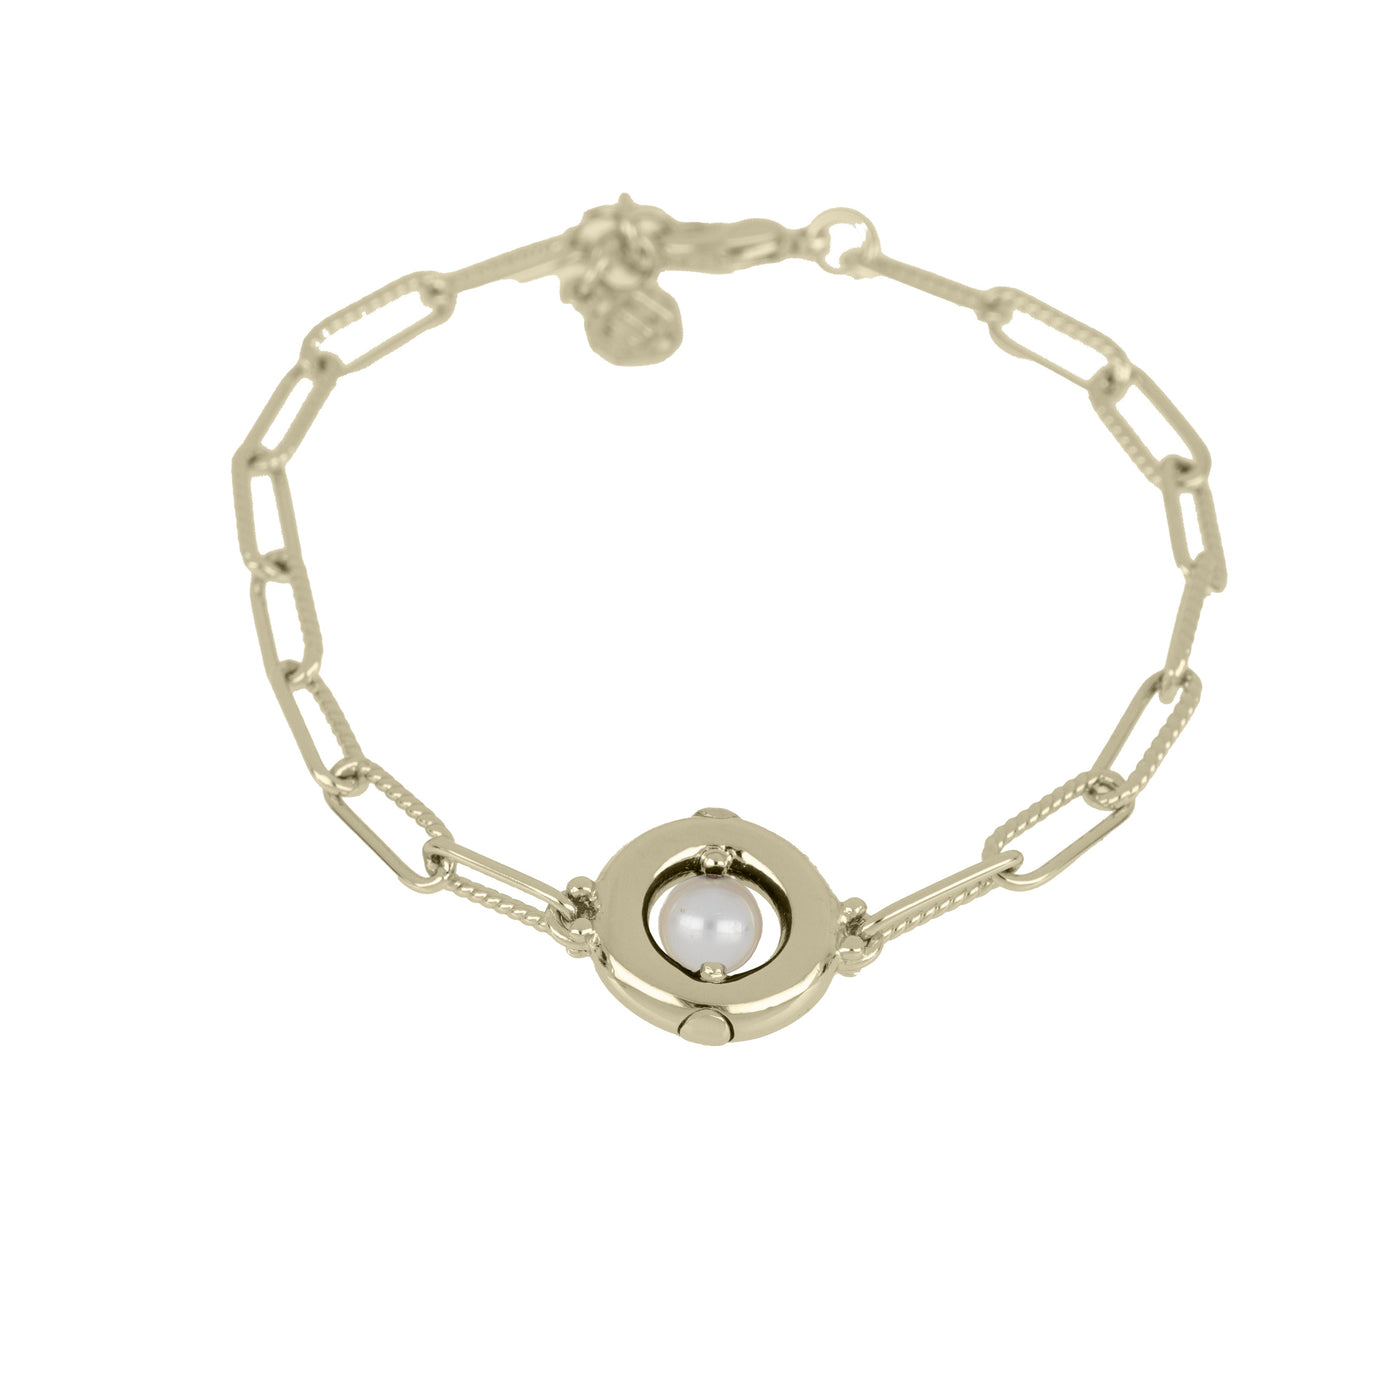 Diamante - Bracelet with Pearl Inset